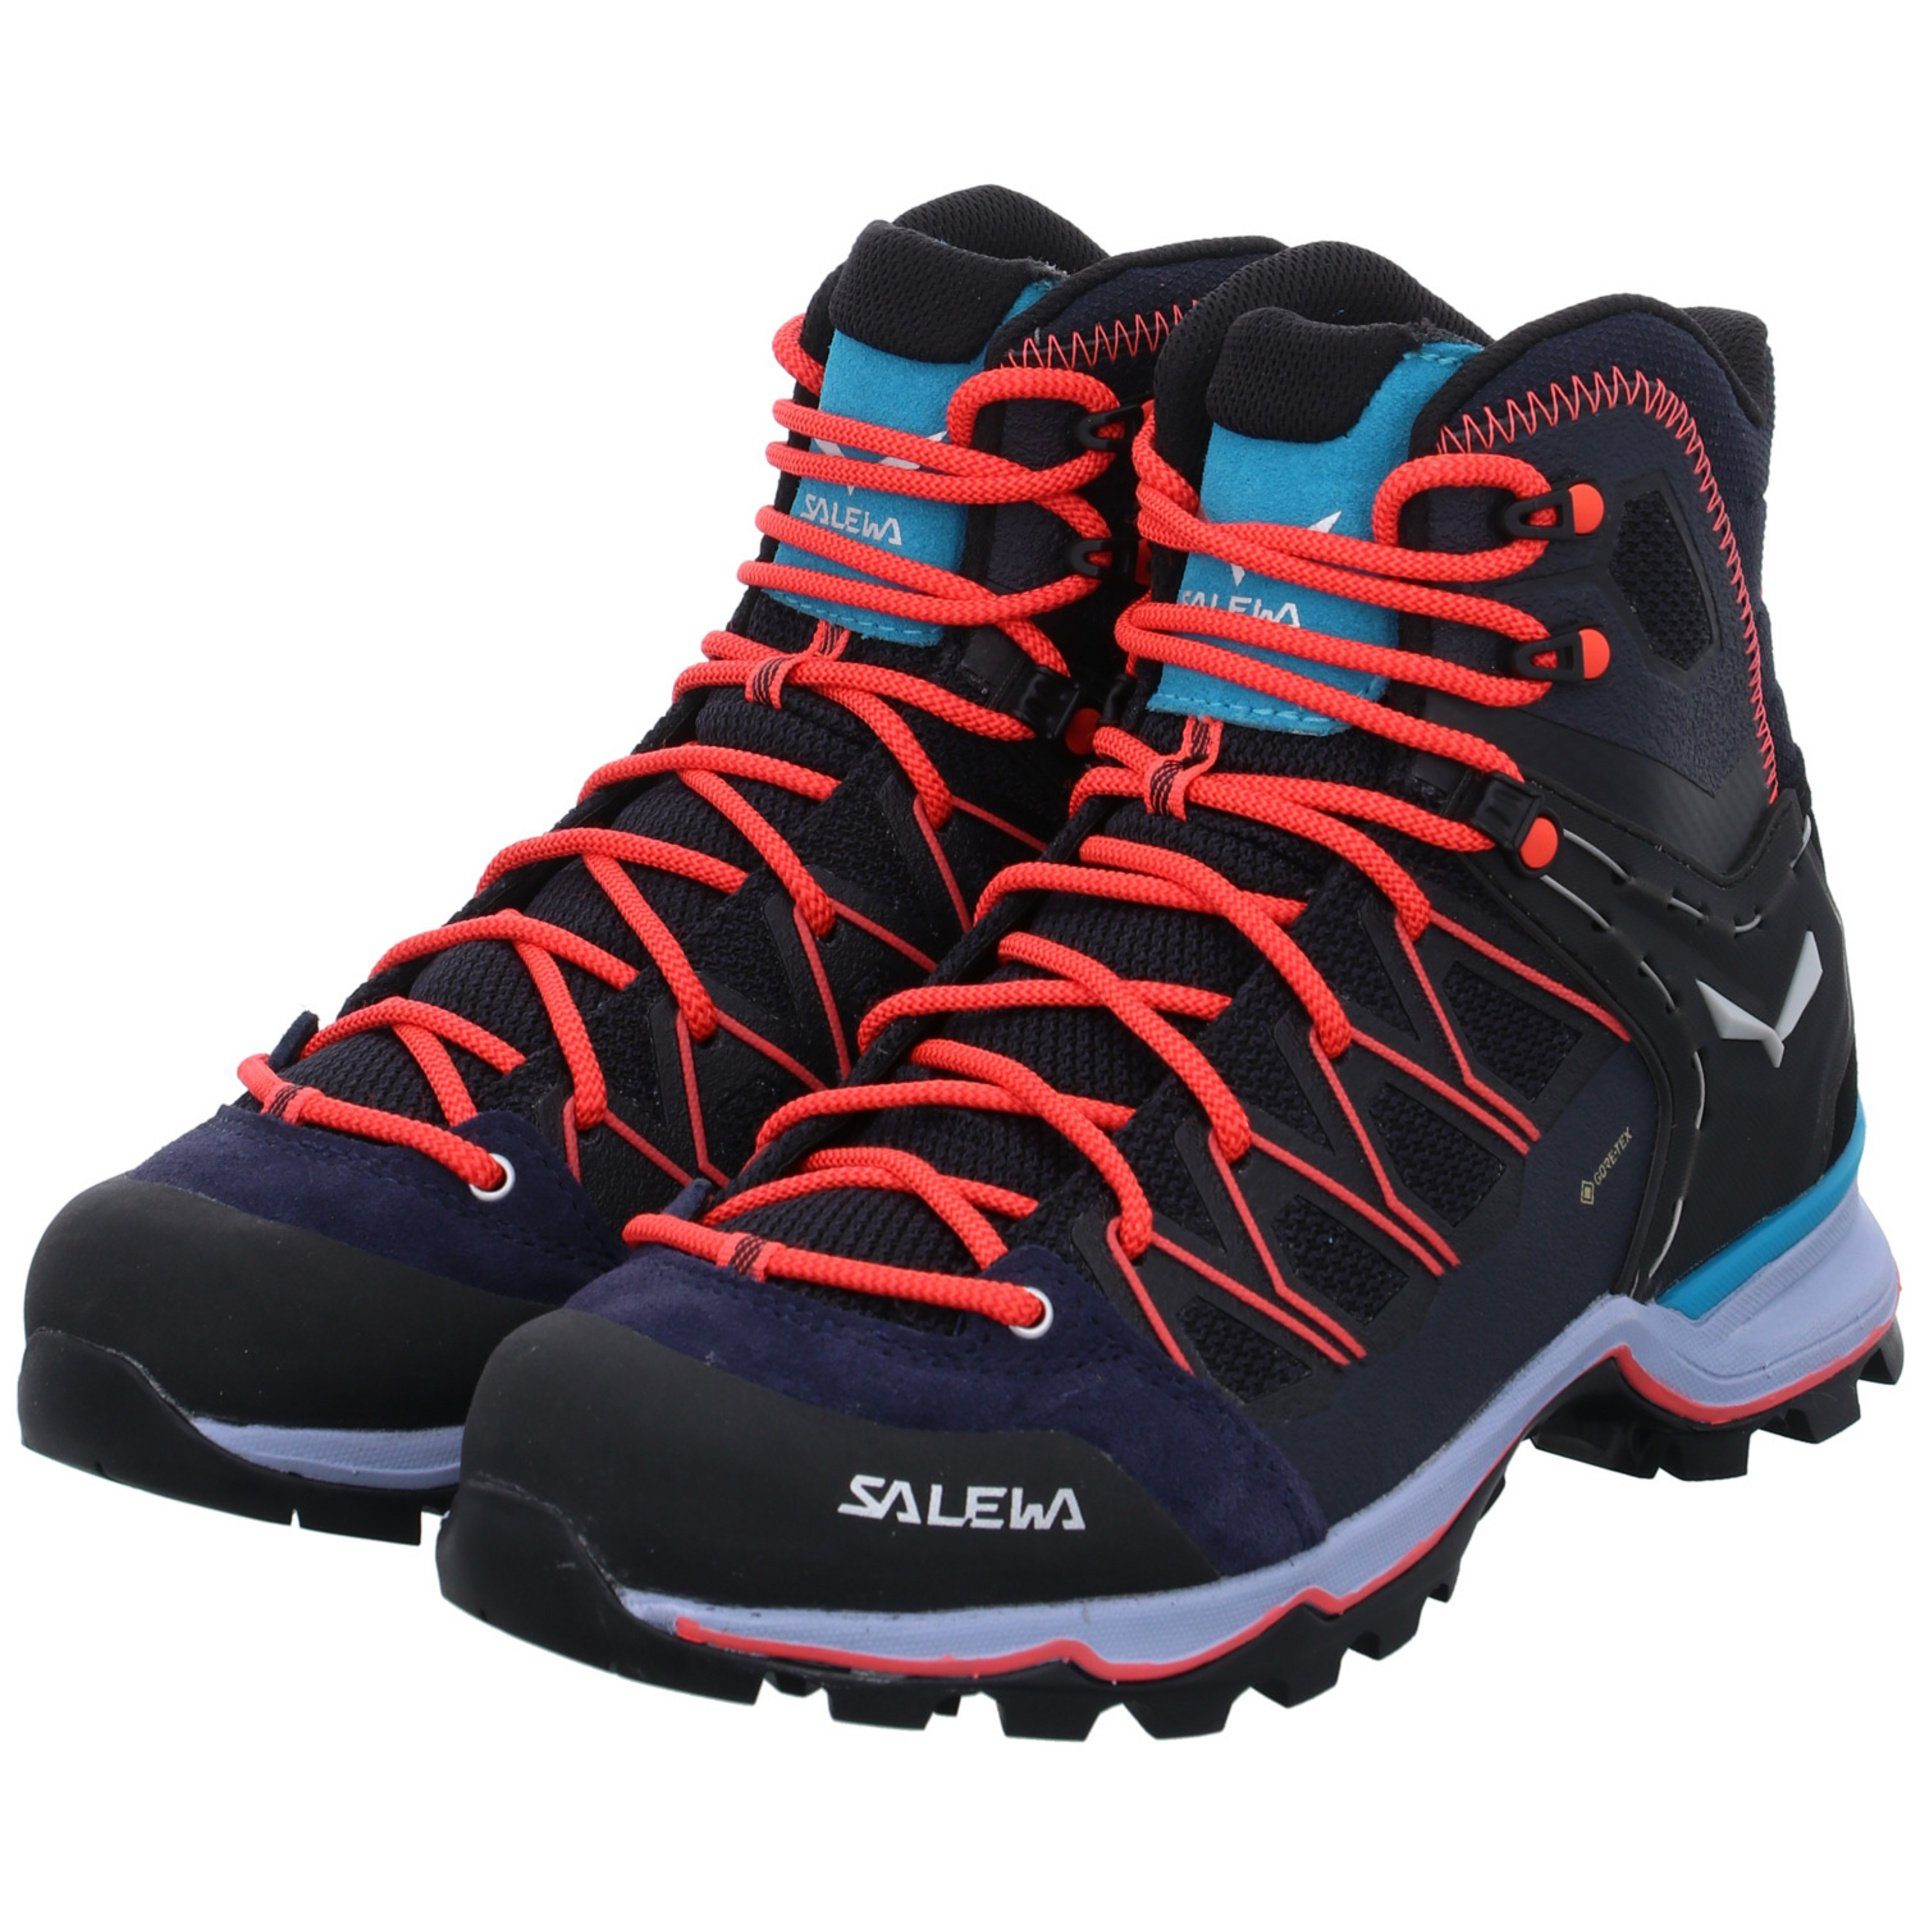 Fog Salewa Navy/Blue Premium Damen Outdoor Outdoorschuh Leder-/Textilkombination Schuhe 3989